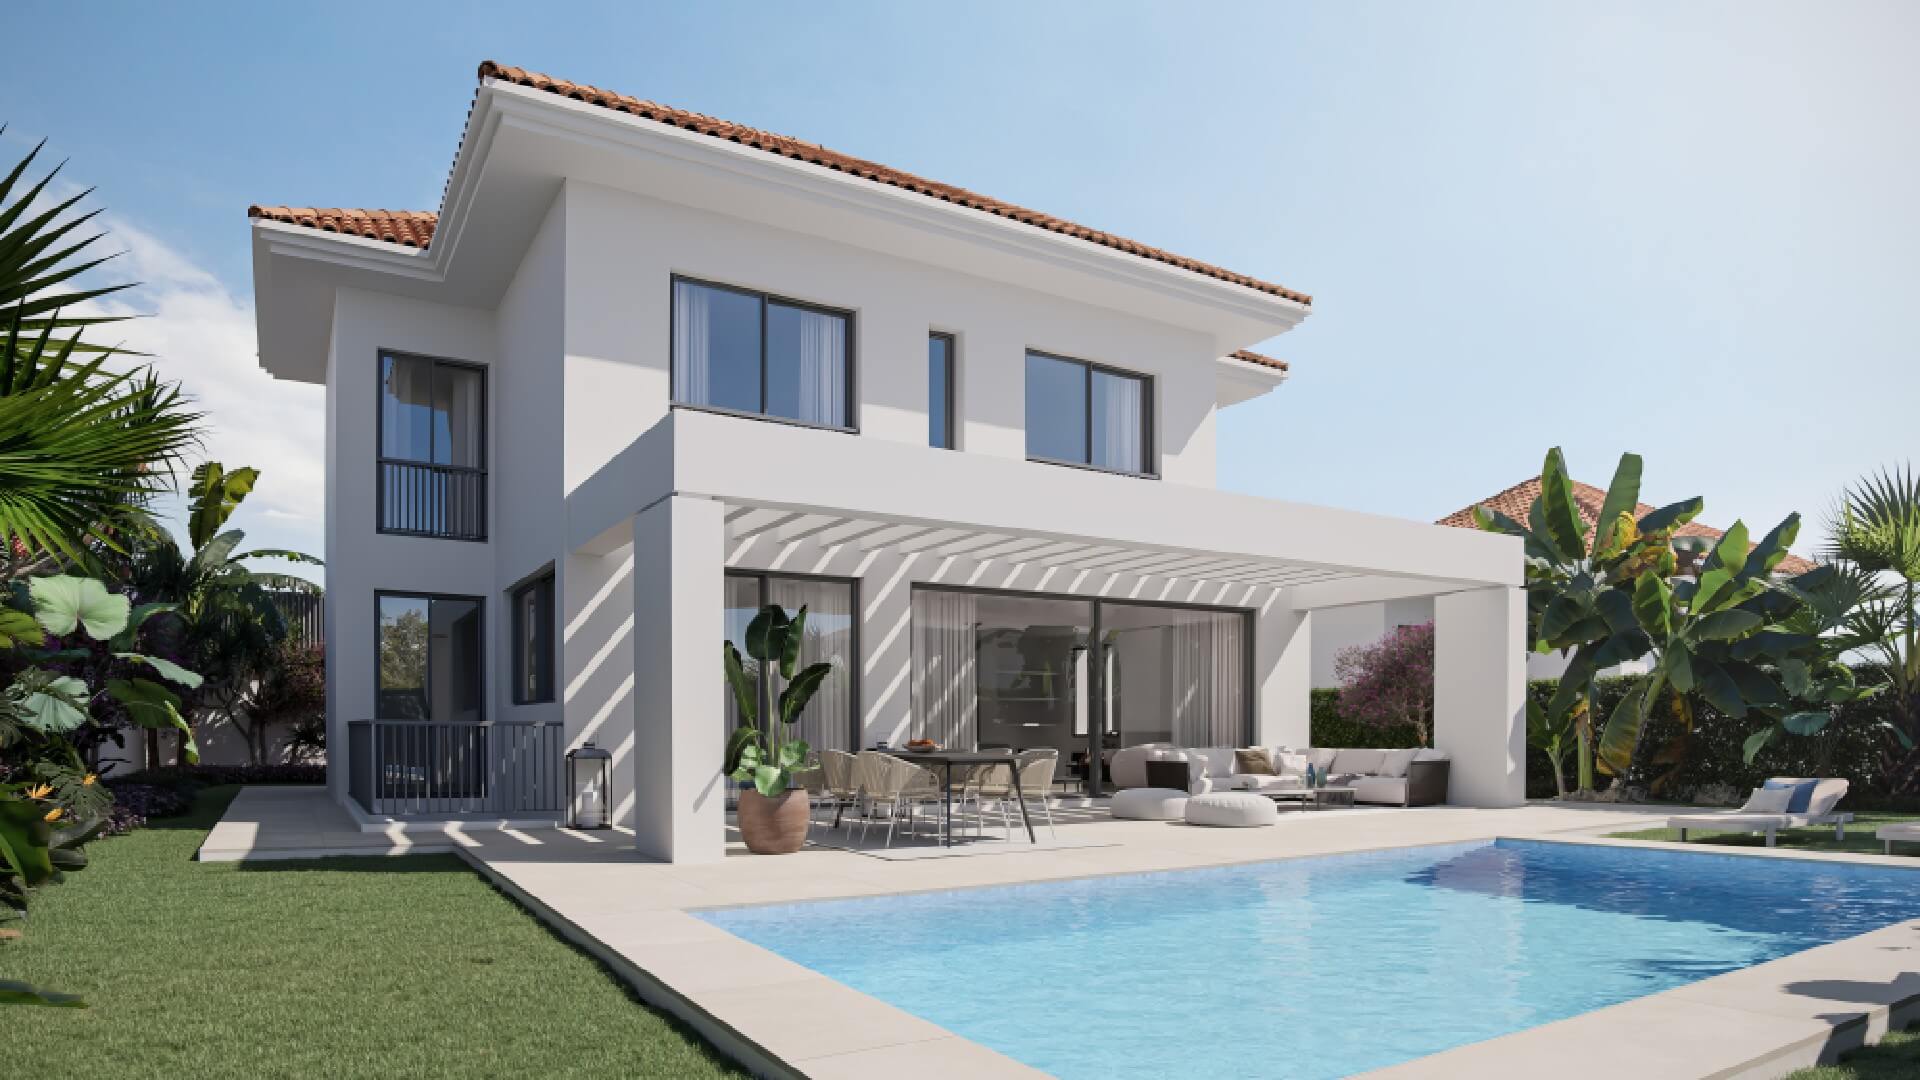 melissa villas calahonda costa del sol nieuwbouw villa kopen prive zwembad modern